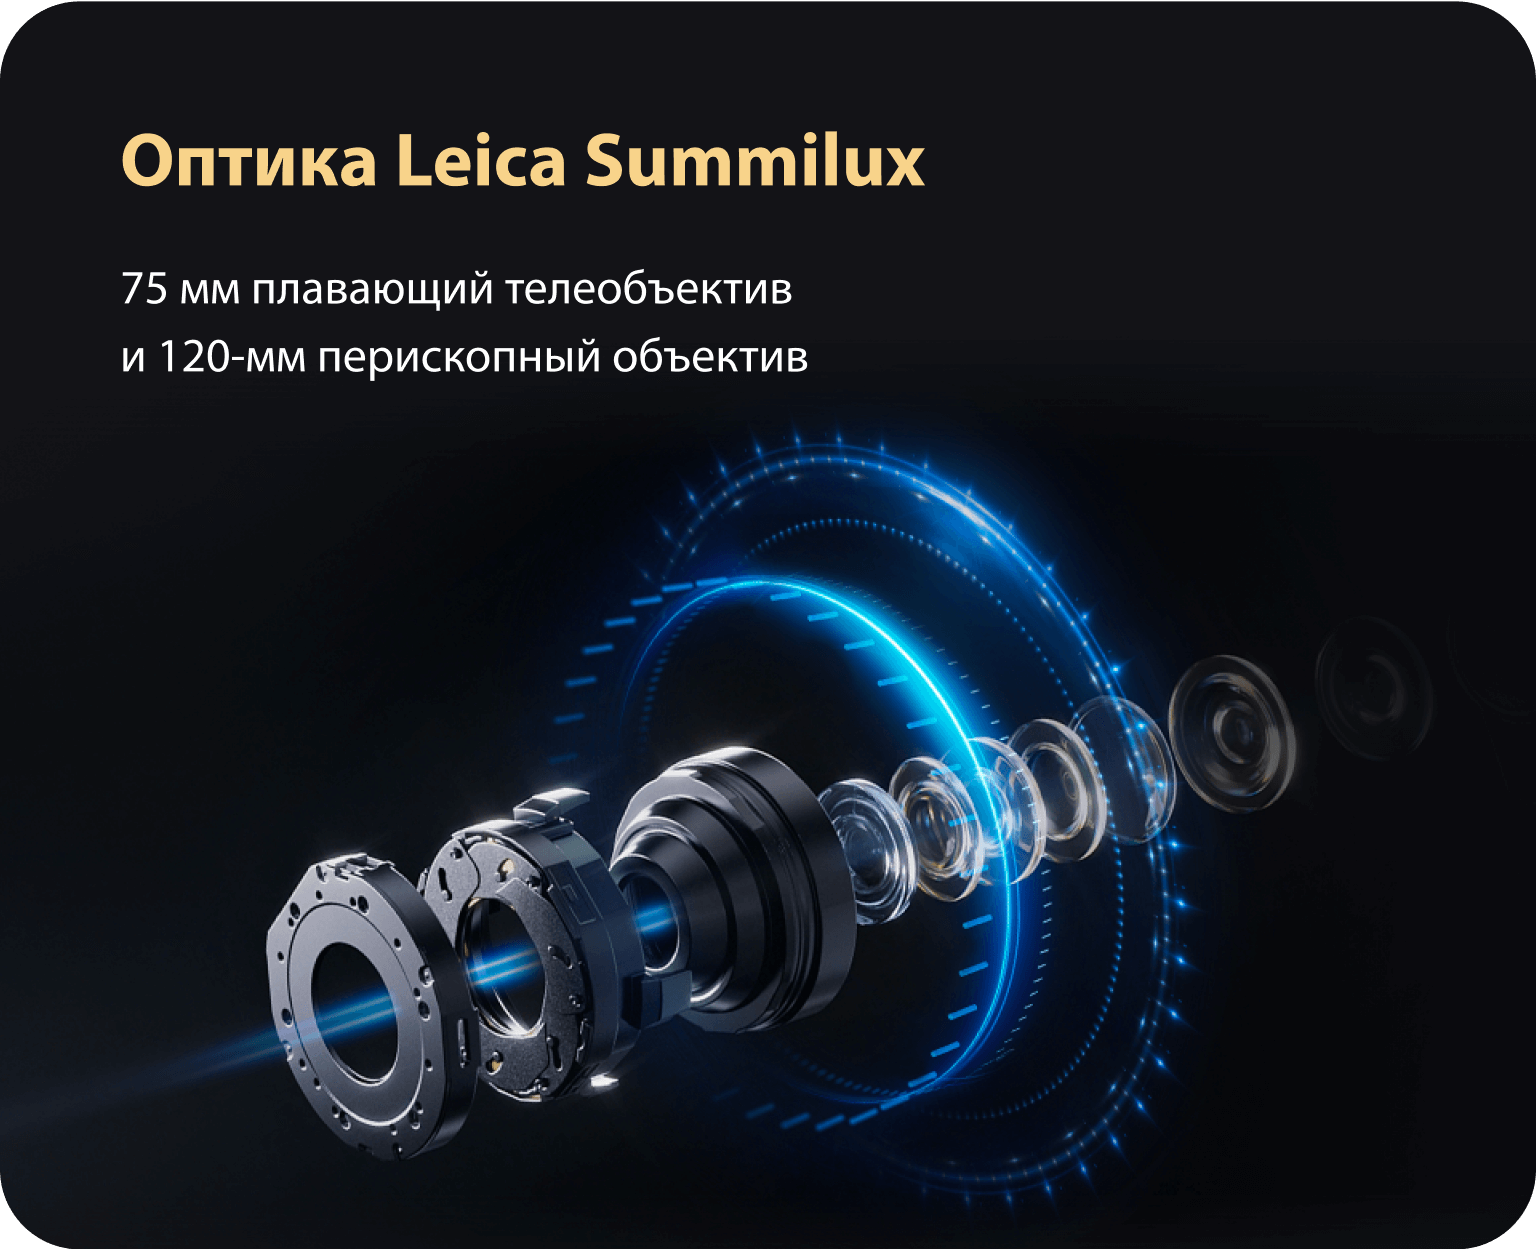 Оптика Leica Summilux. 75 мм плавающий телеобъектив и 120-мм перископный объектив